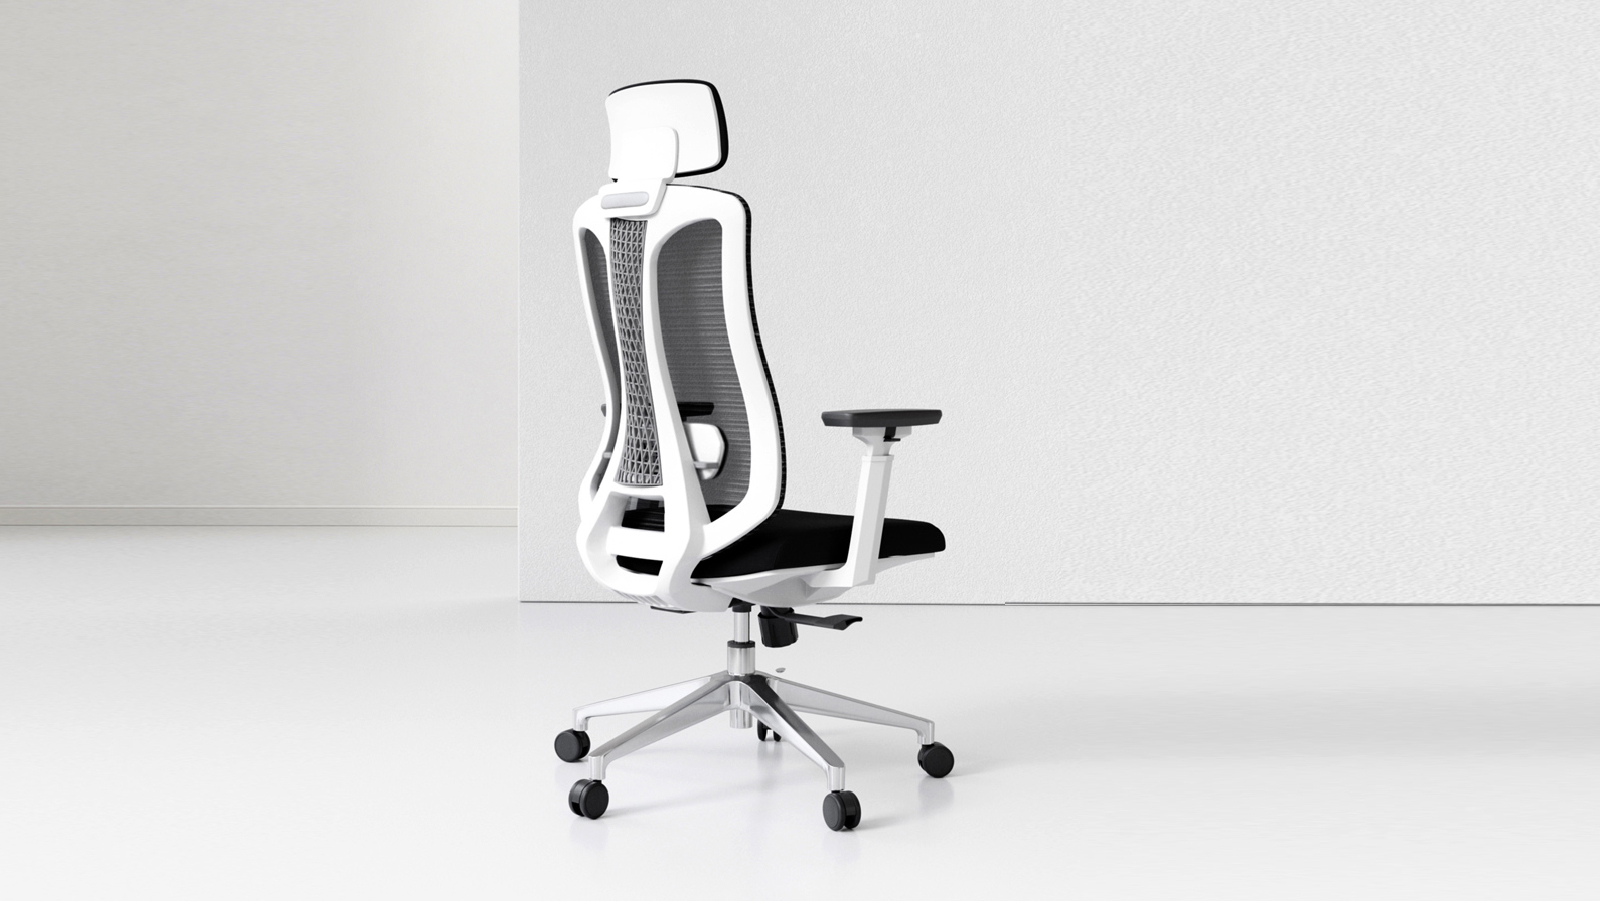 Logicfox Ergonomic Office Chair: Saddle-shaped Sponge Seat